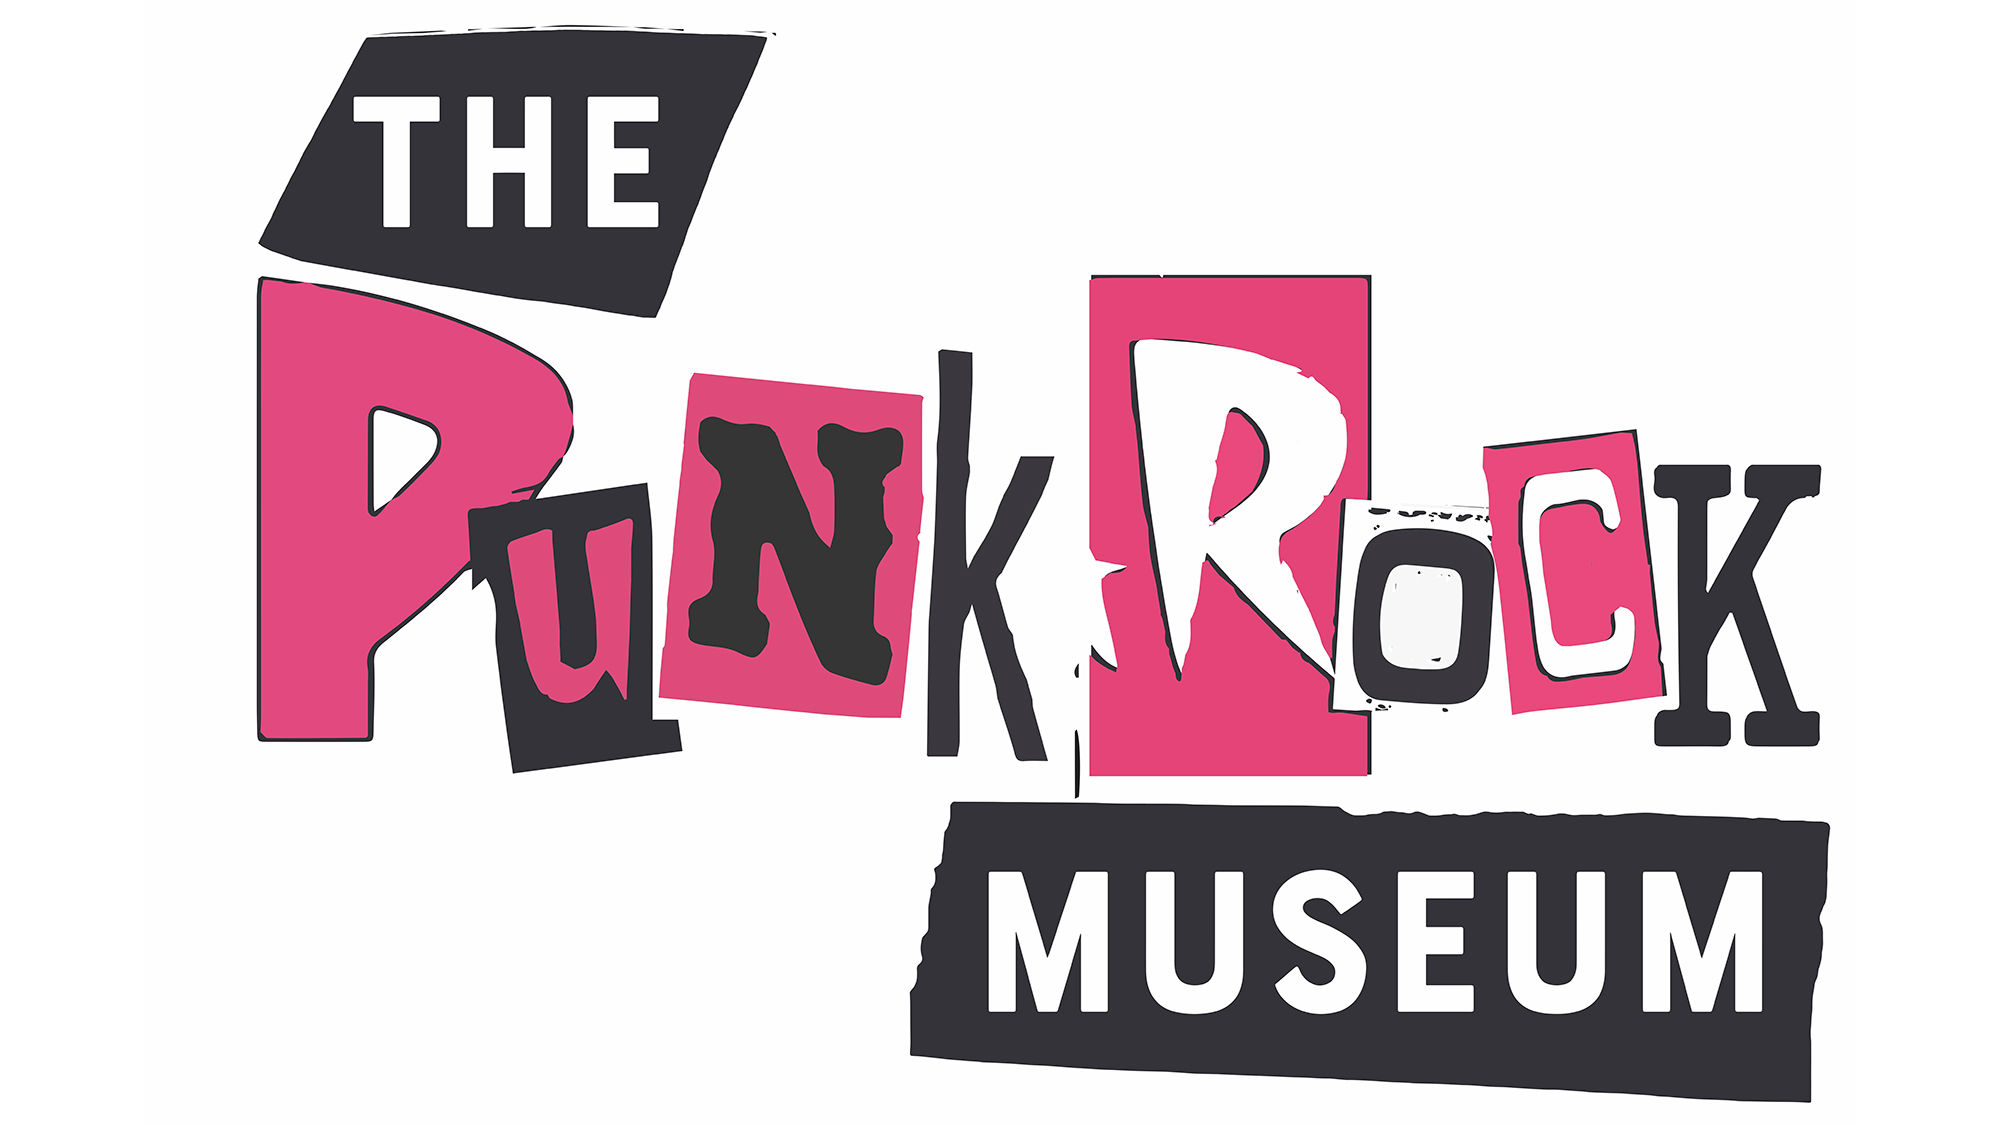 Punk Rock Museum is set to open in Las Vegas: Travel Weekly